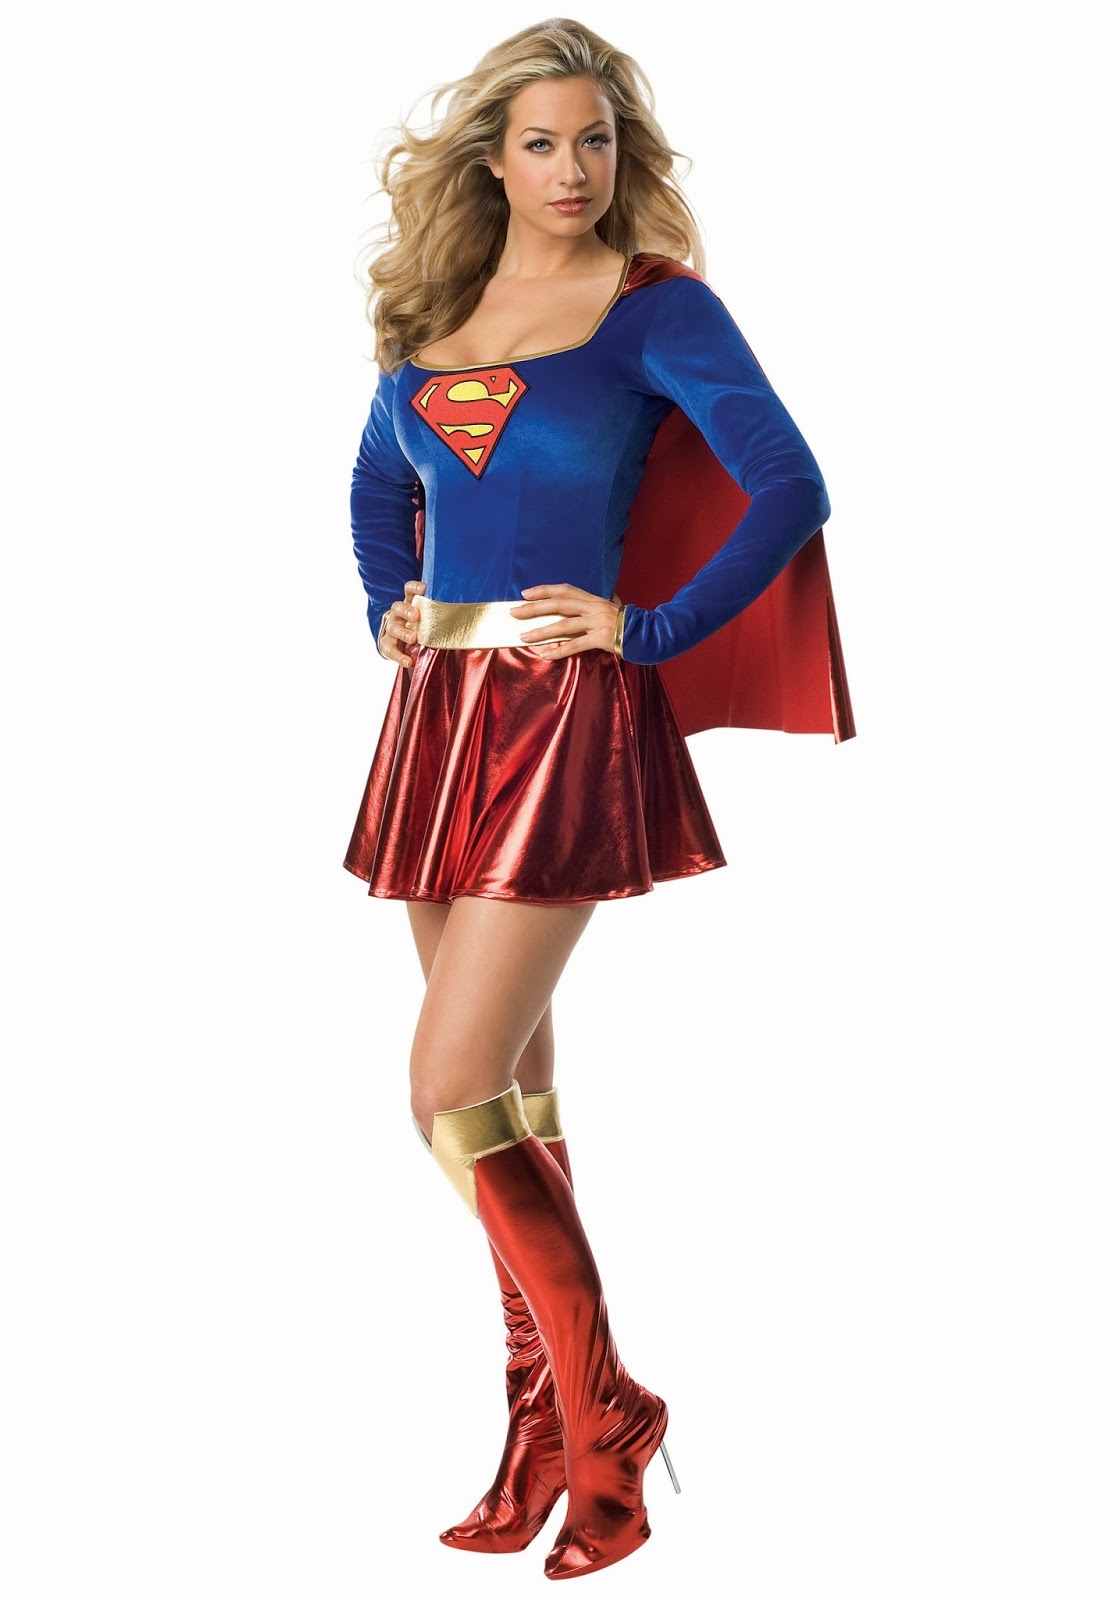 Super Girl HD Wallpaper